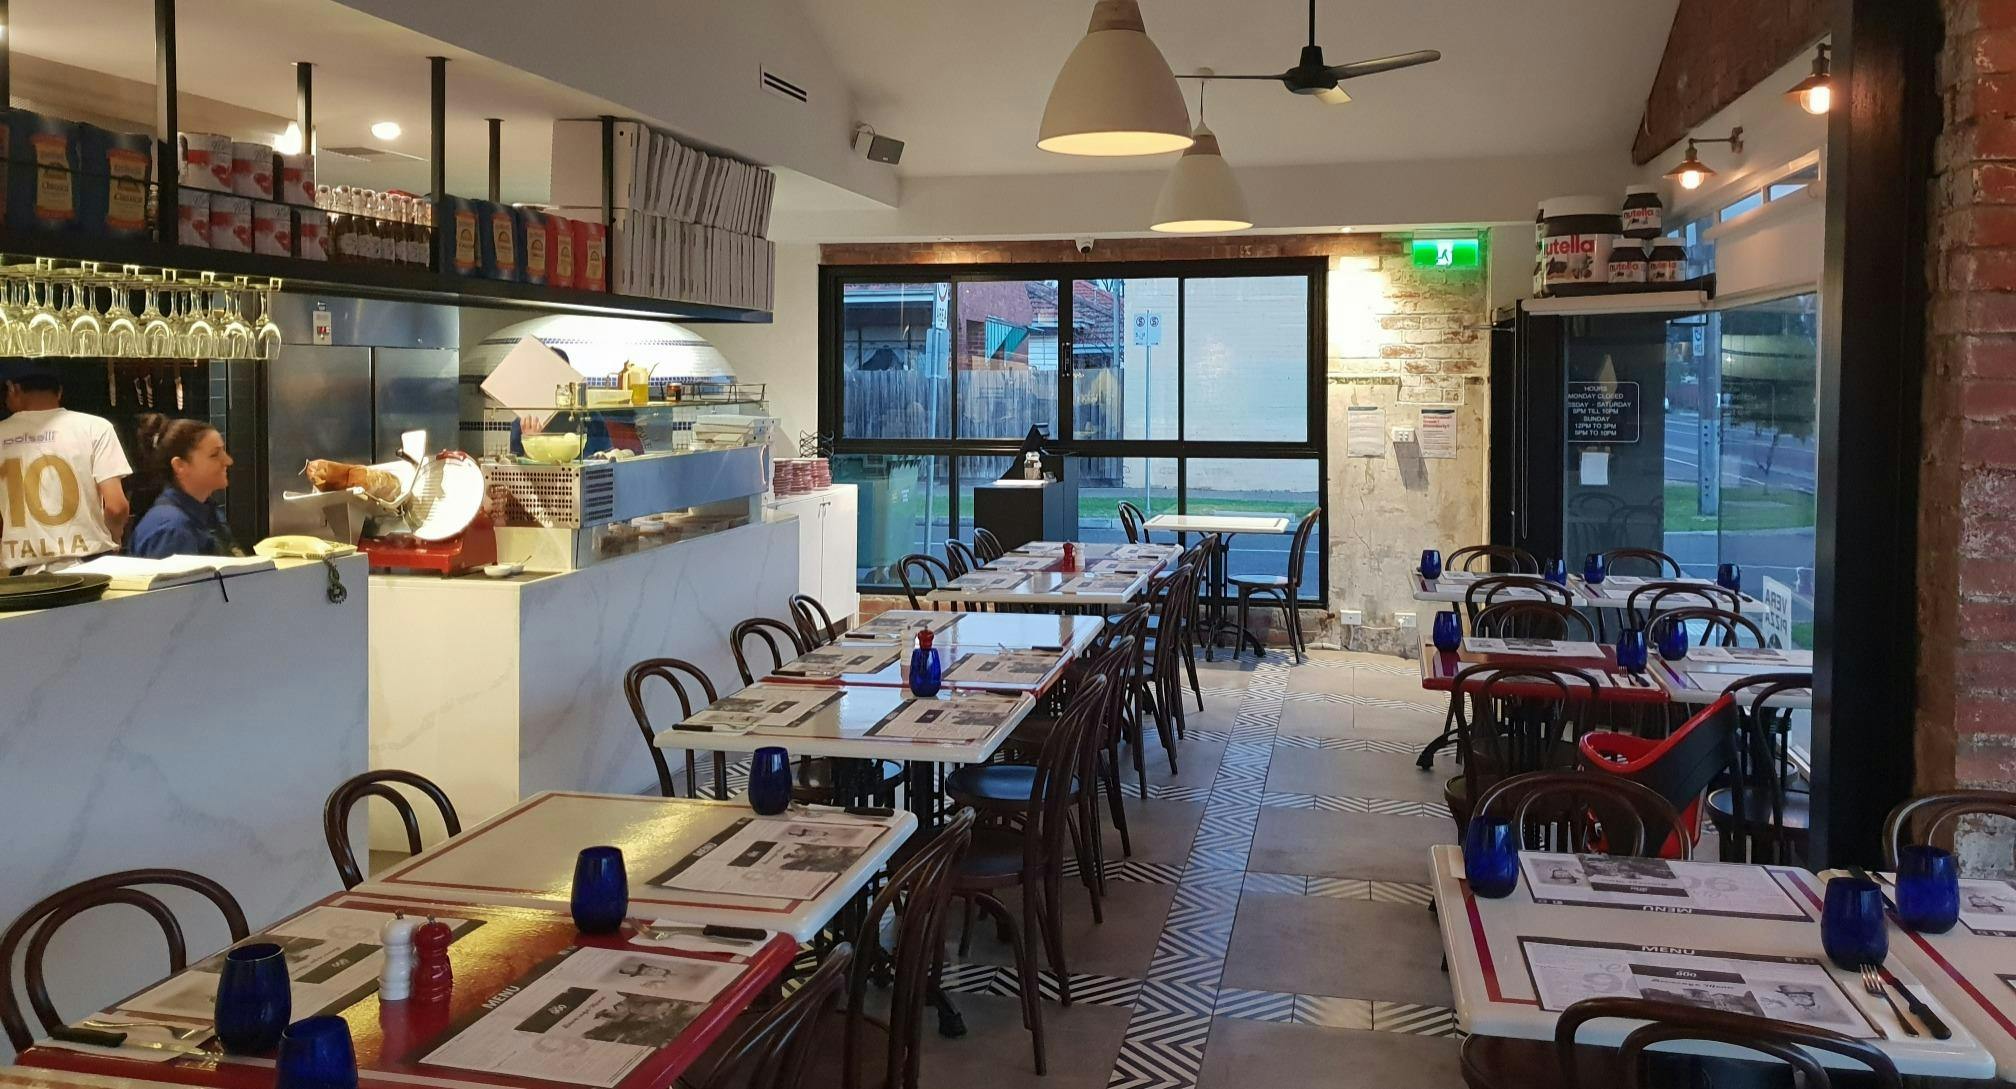 Photo of restaurant Circa 900 Pizzeria Napoletana in Pascoe Vale, Melbourne